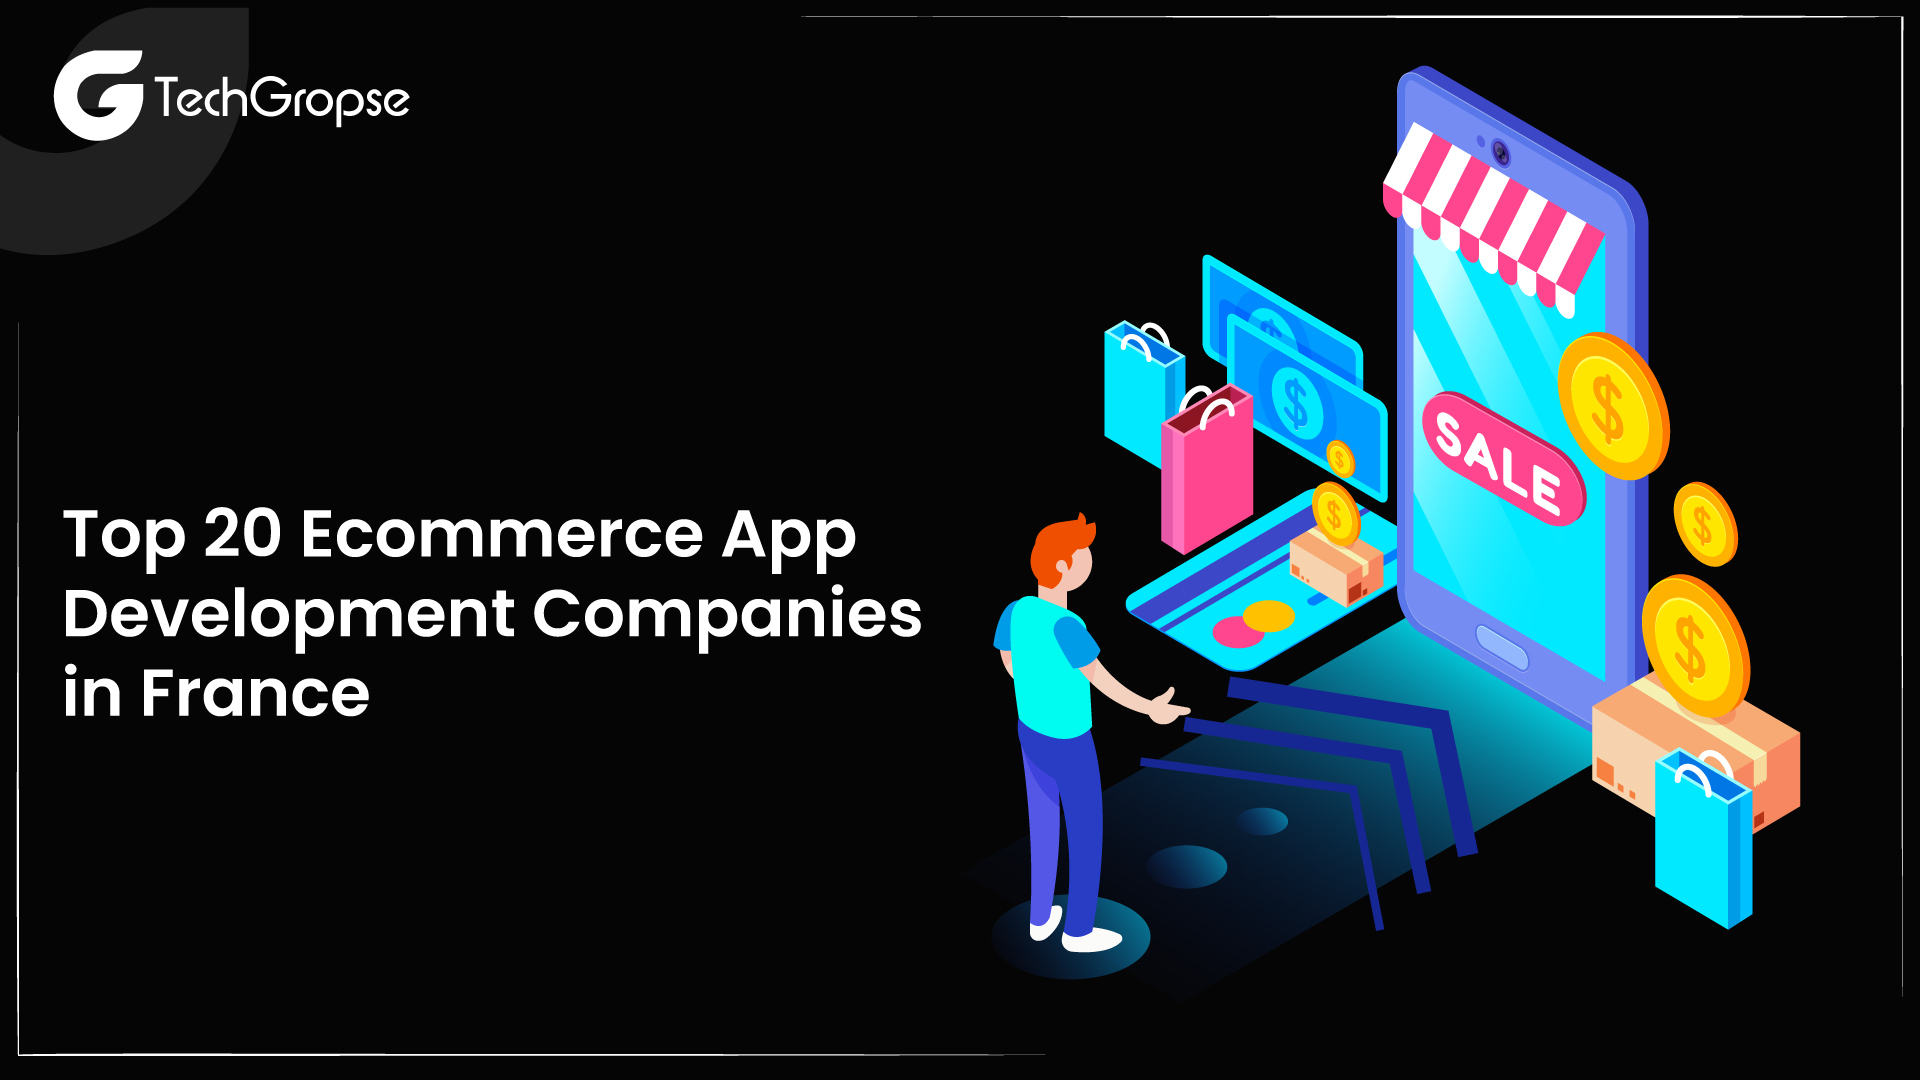 Top 20 ecommerce App Development Companies in France